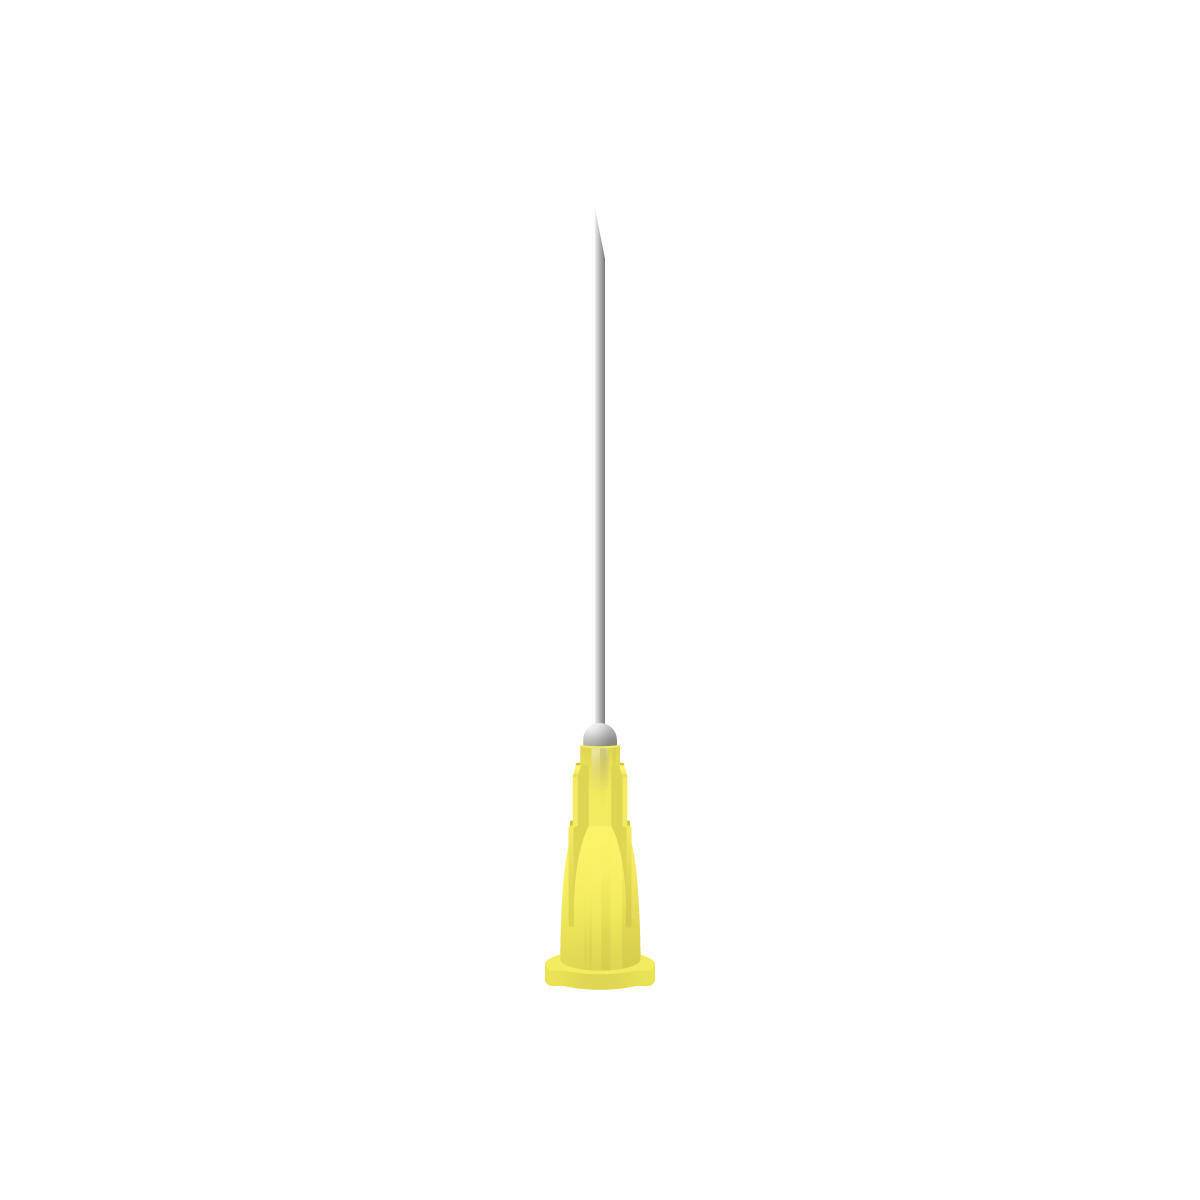 20g Yellow 1.5 inch BBraun Sterican Needles - UKMEDI